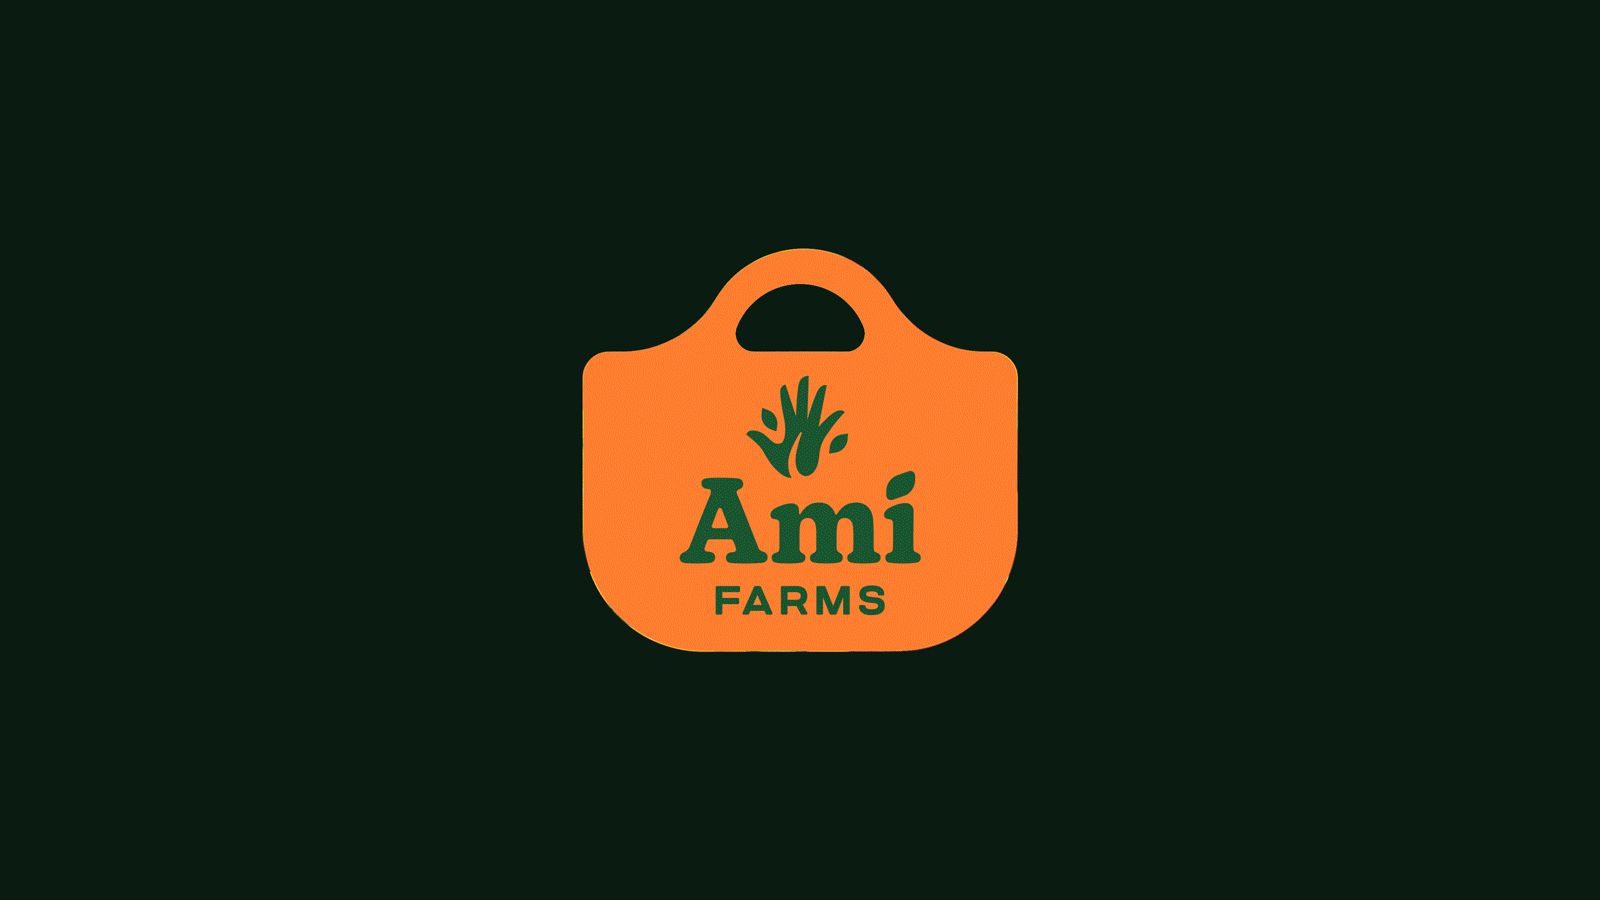 Animation of a dynamic logo icon of a bayong bag for bidynamic farm and brand Ami Farms